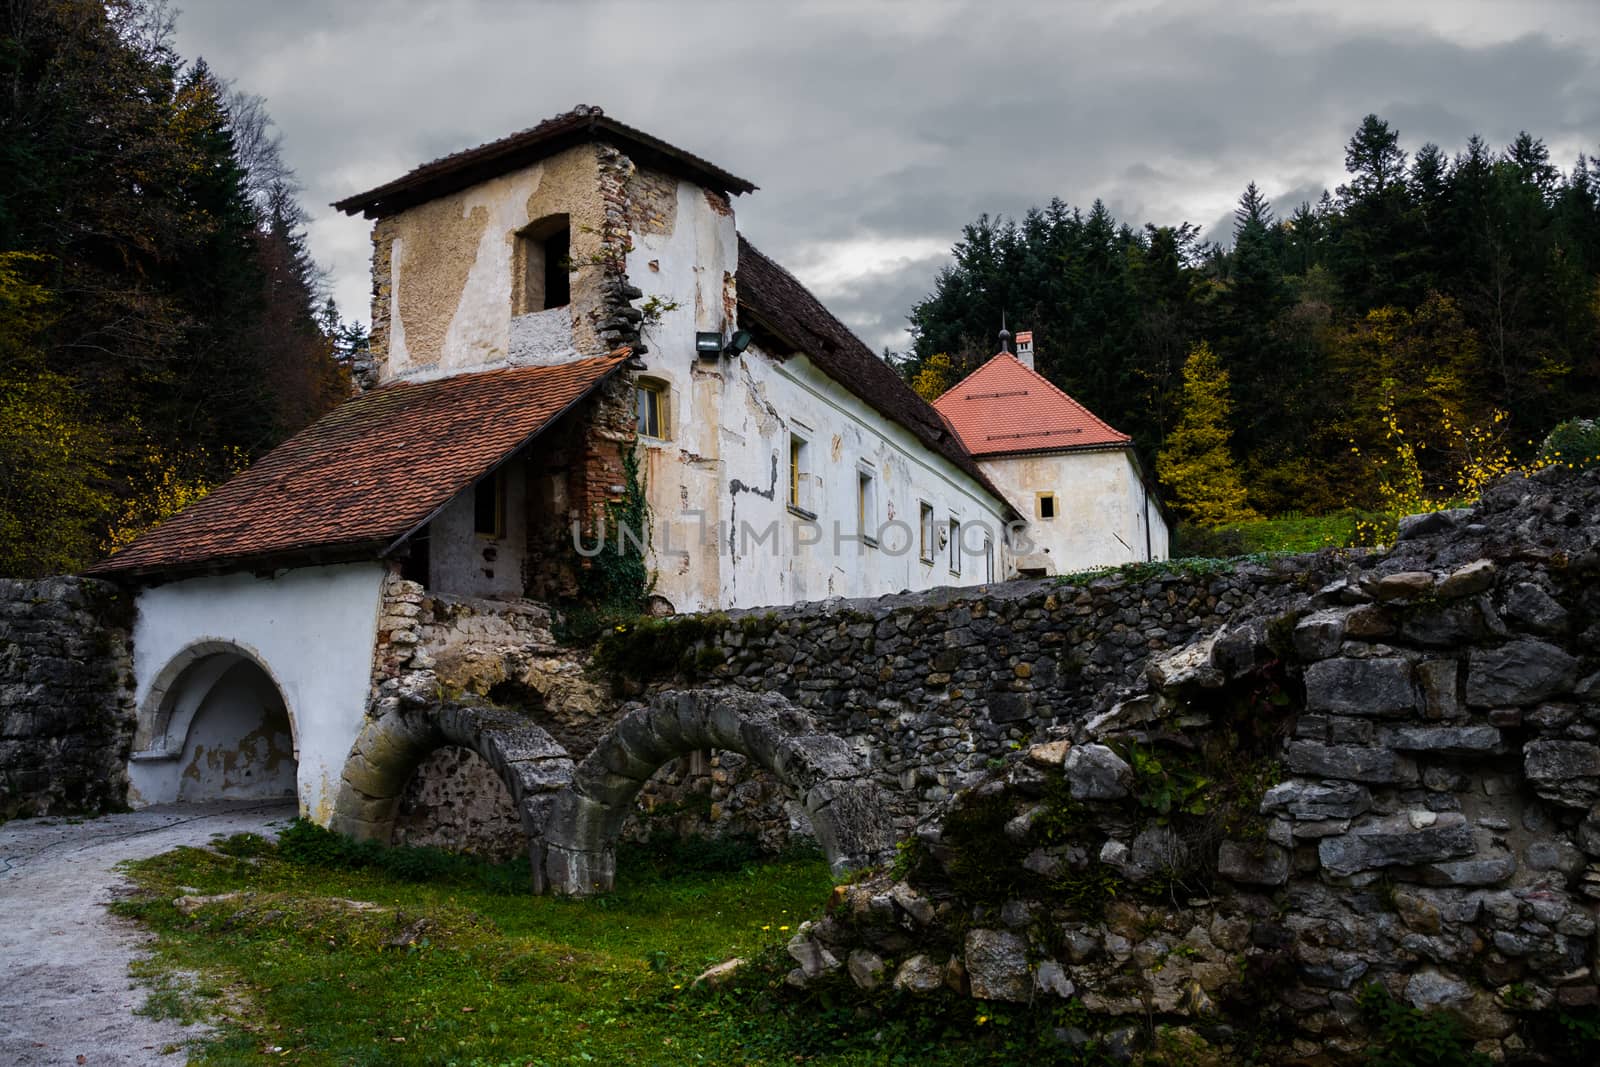 Zicka kartuzija (zice charterhouse) Carthusian monastery .Sloven by rainfallsup